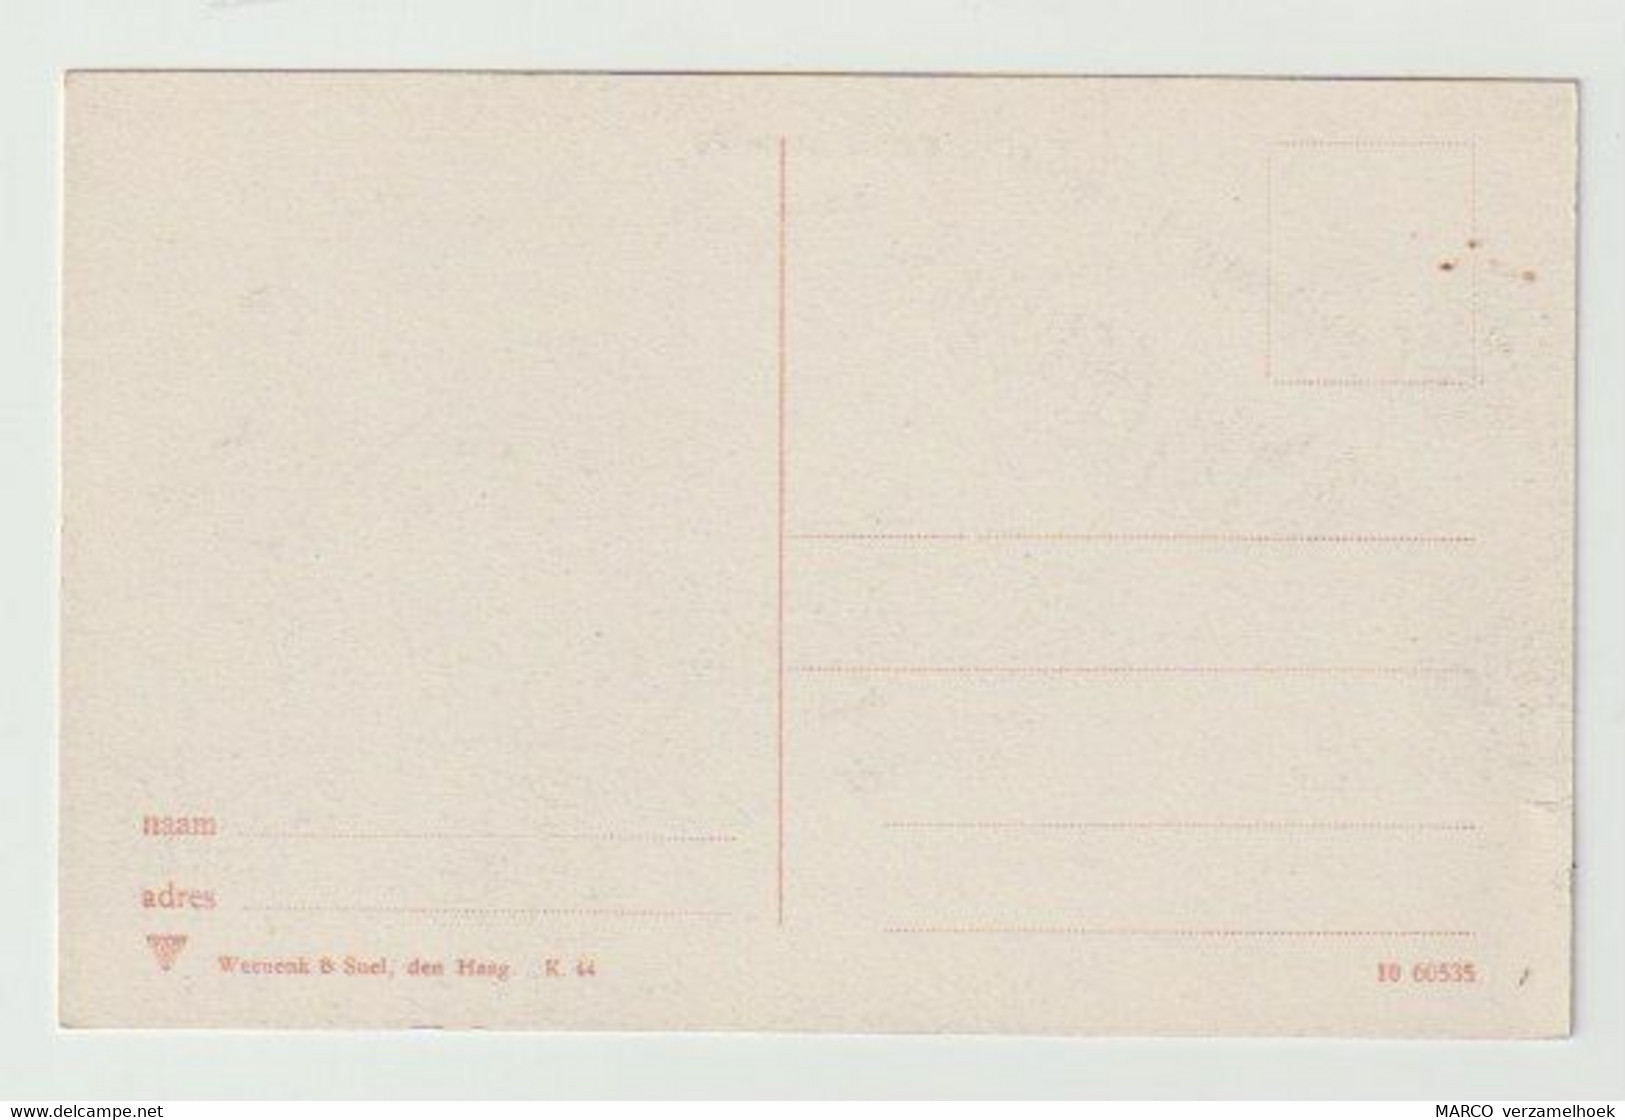 Postcard-ansichtkaart: Kasteel Raadhuis Stadhuis Helmond (NL) 1960 - Helmond